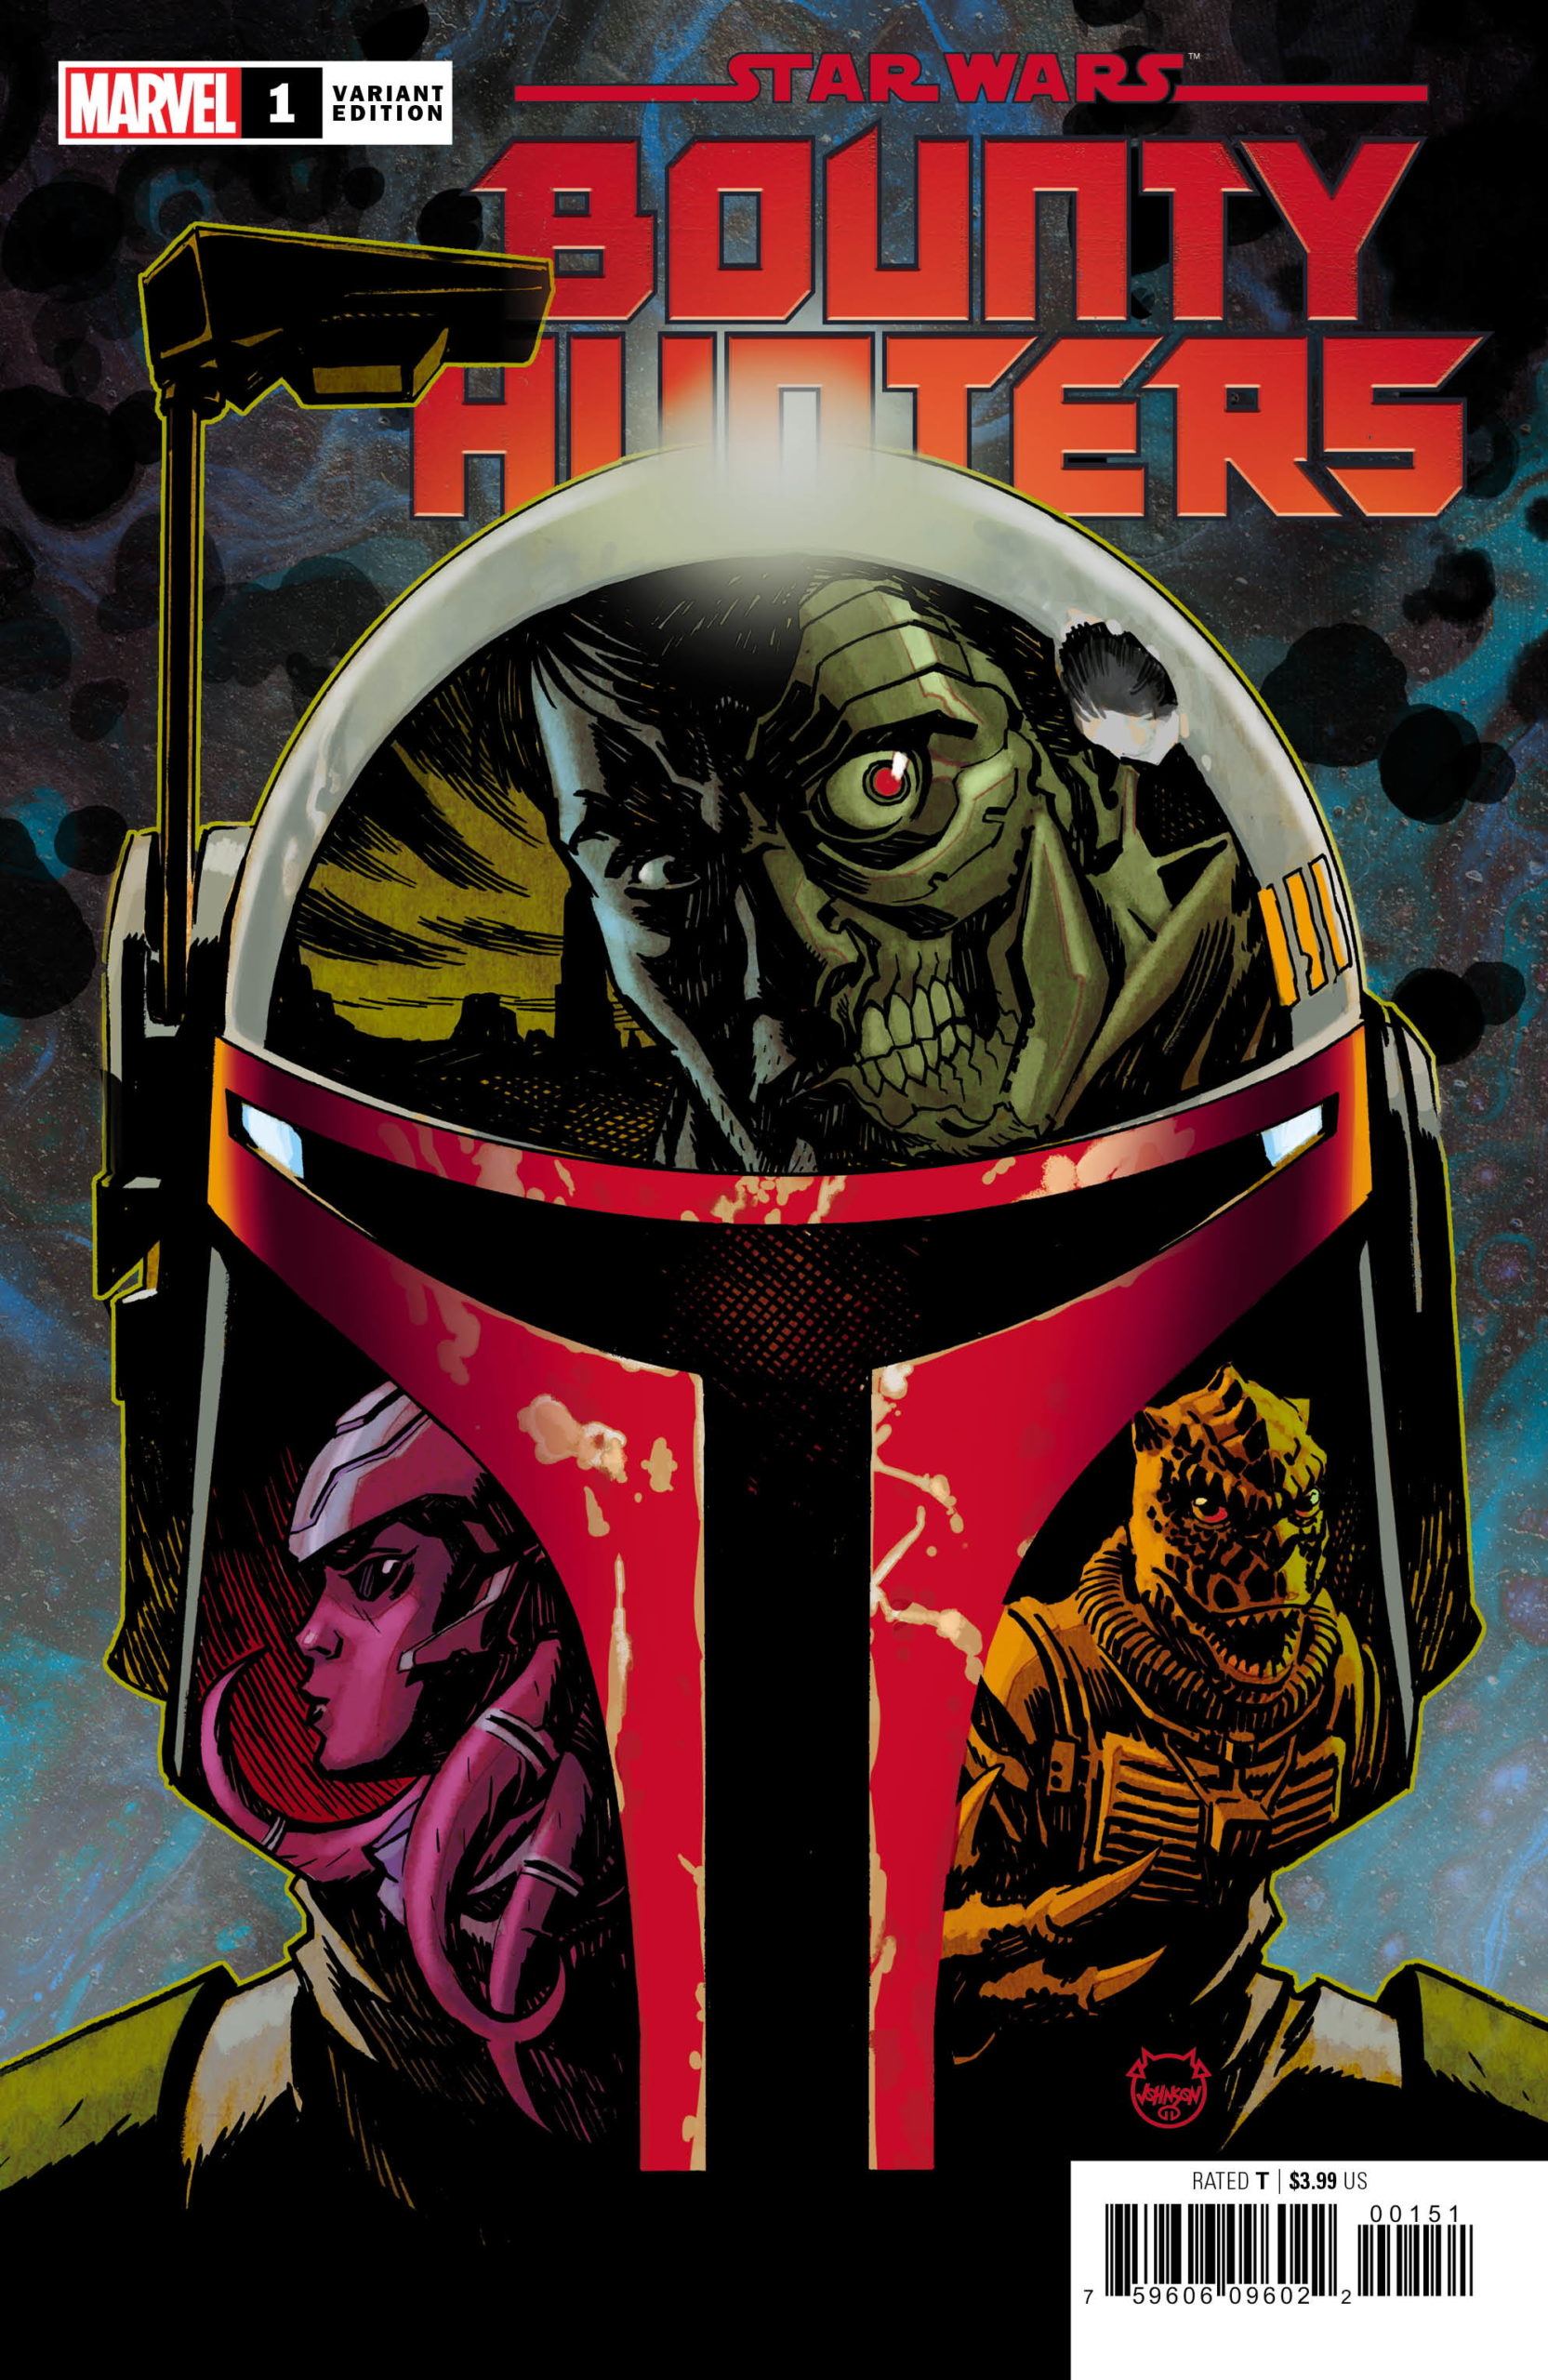 Bounty Hunters #1 (Dave Johnson Variant Cover) (11.03.2020)